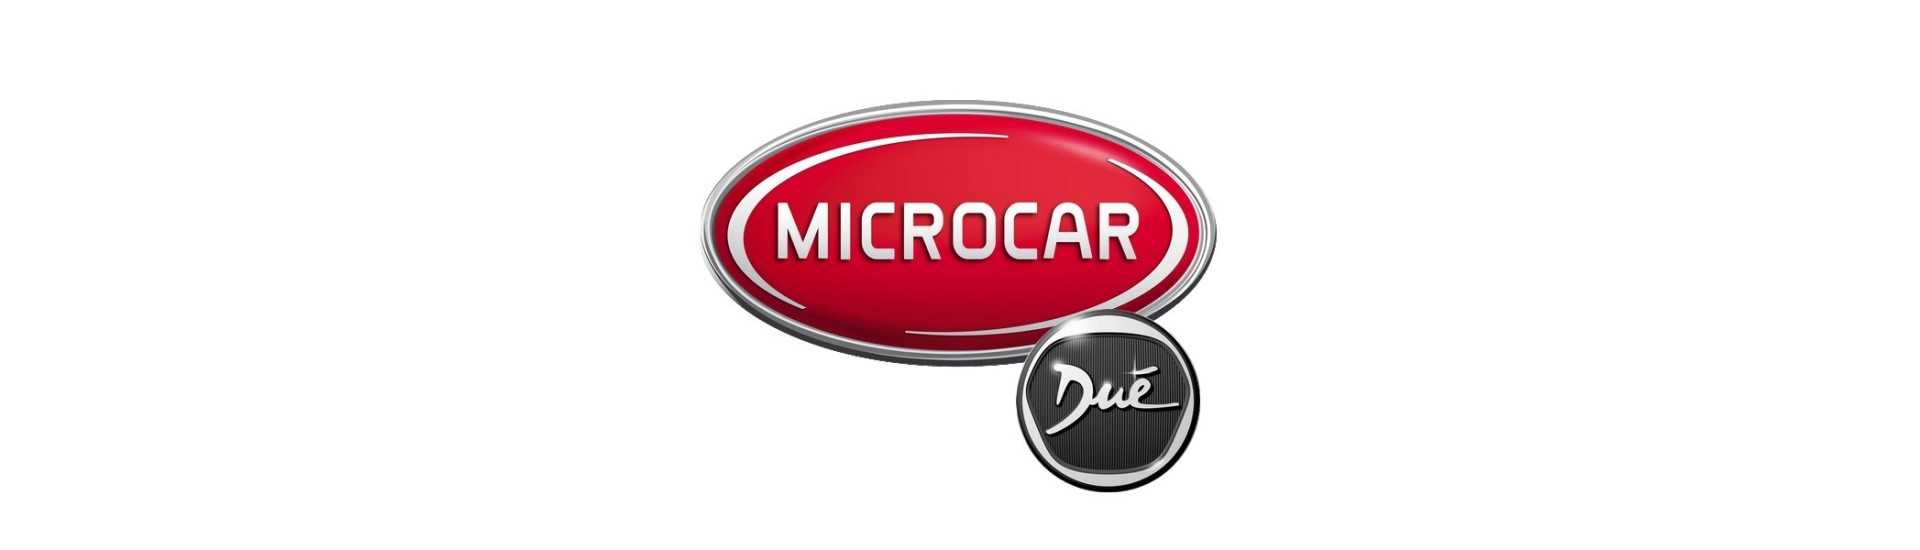 Cea mai buna masina fara permis Microcar Dué